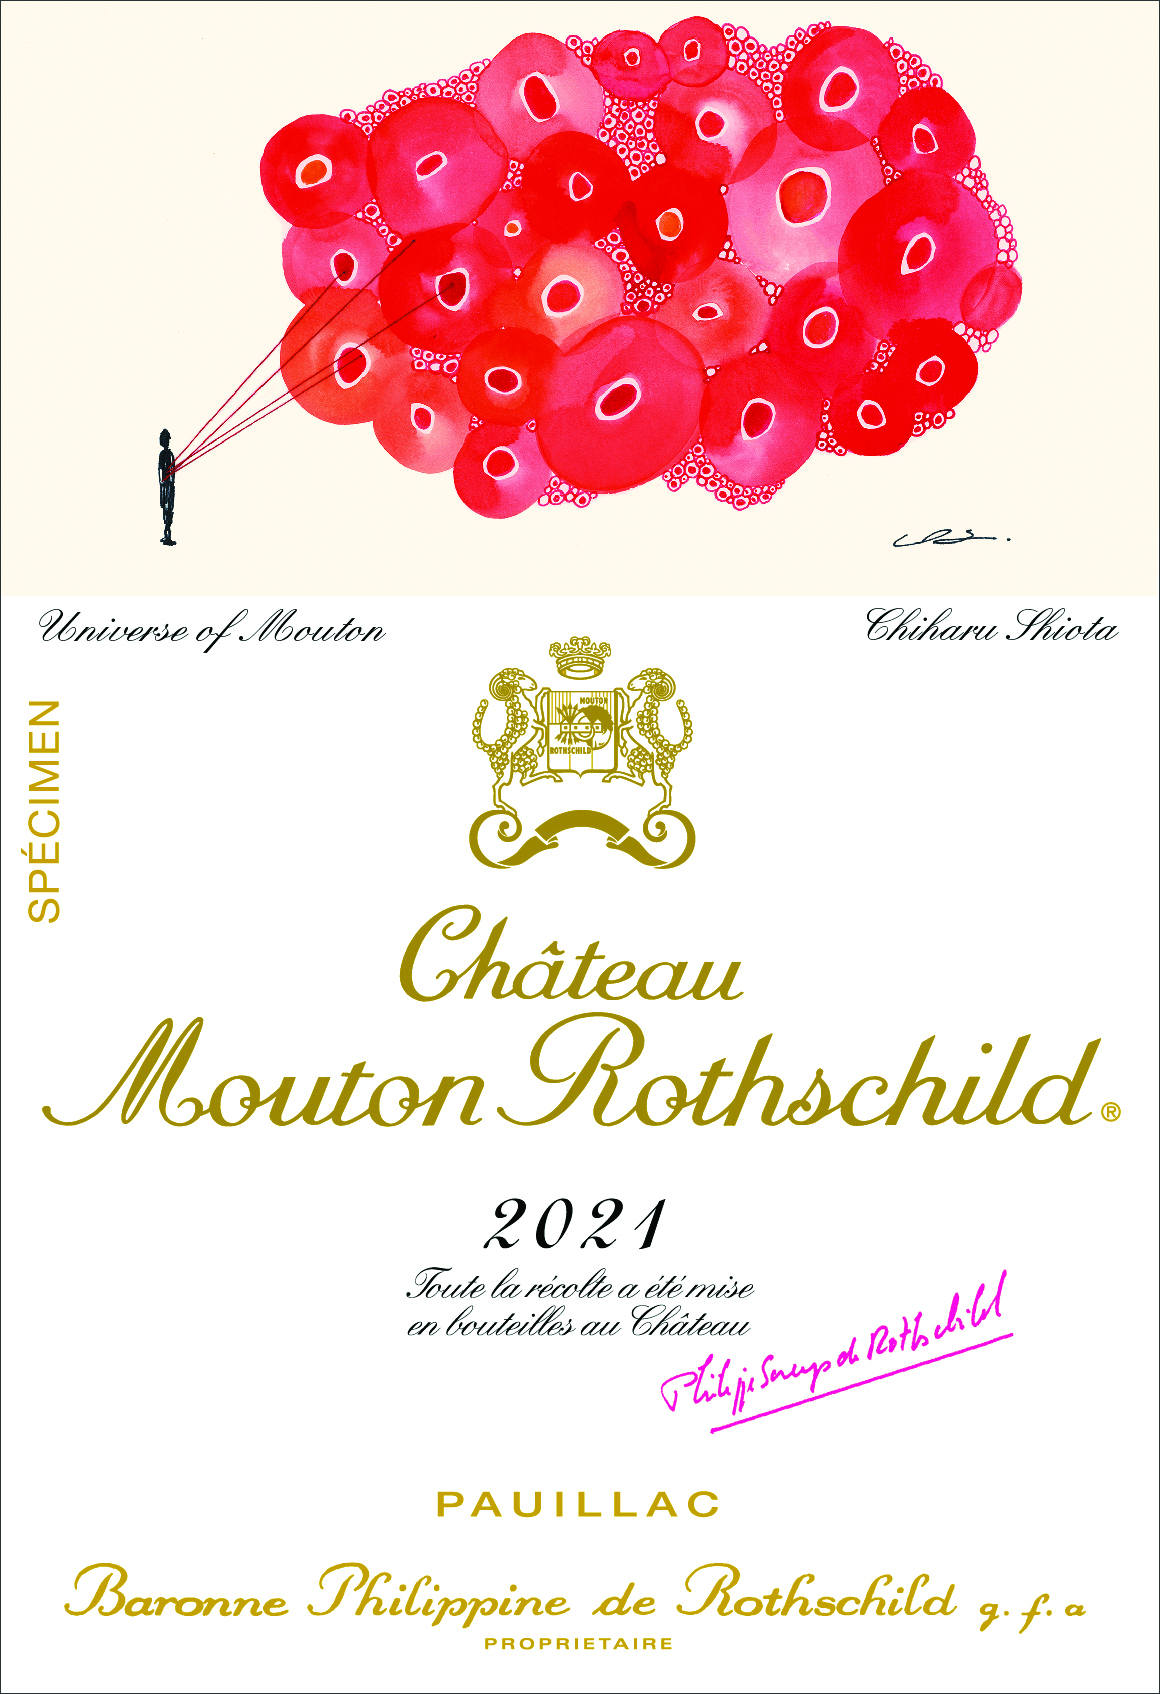 Chiharu Shiota creates Mouton Rothschild 2021 label - Jane Anson ...